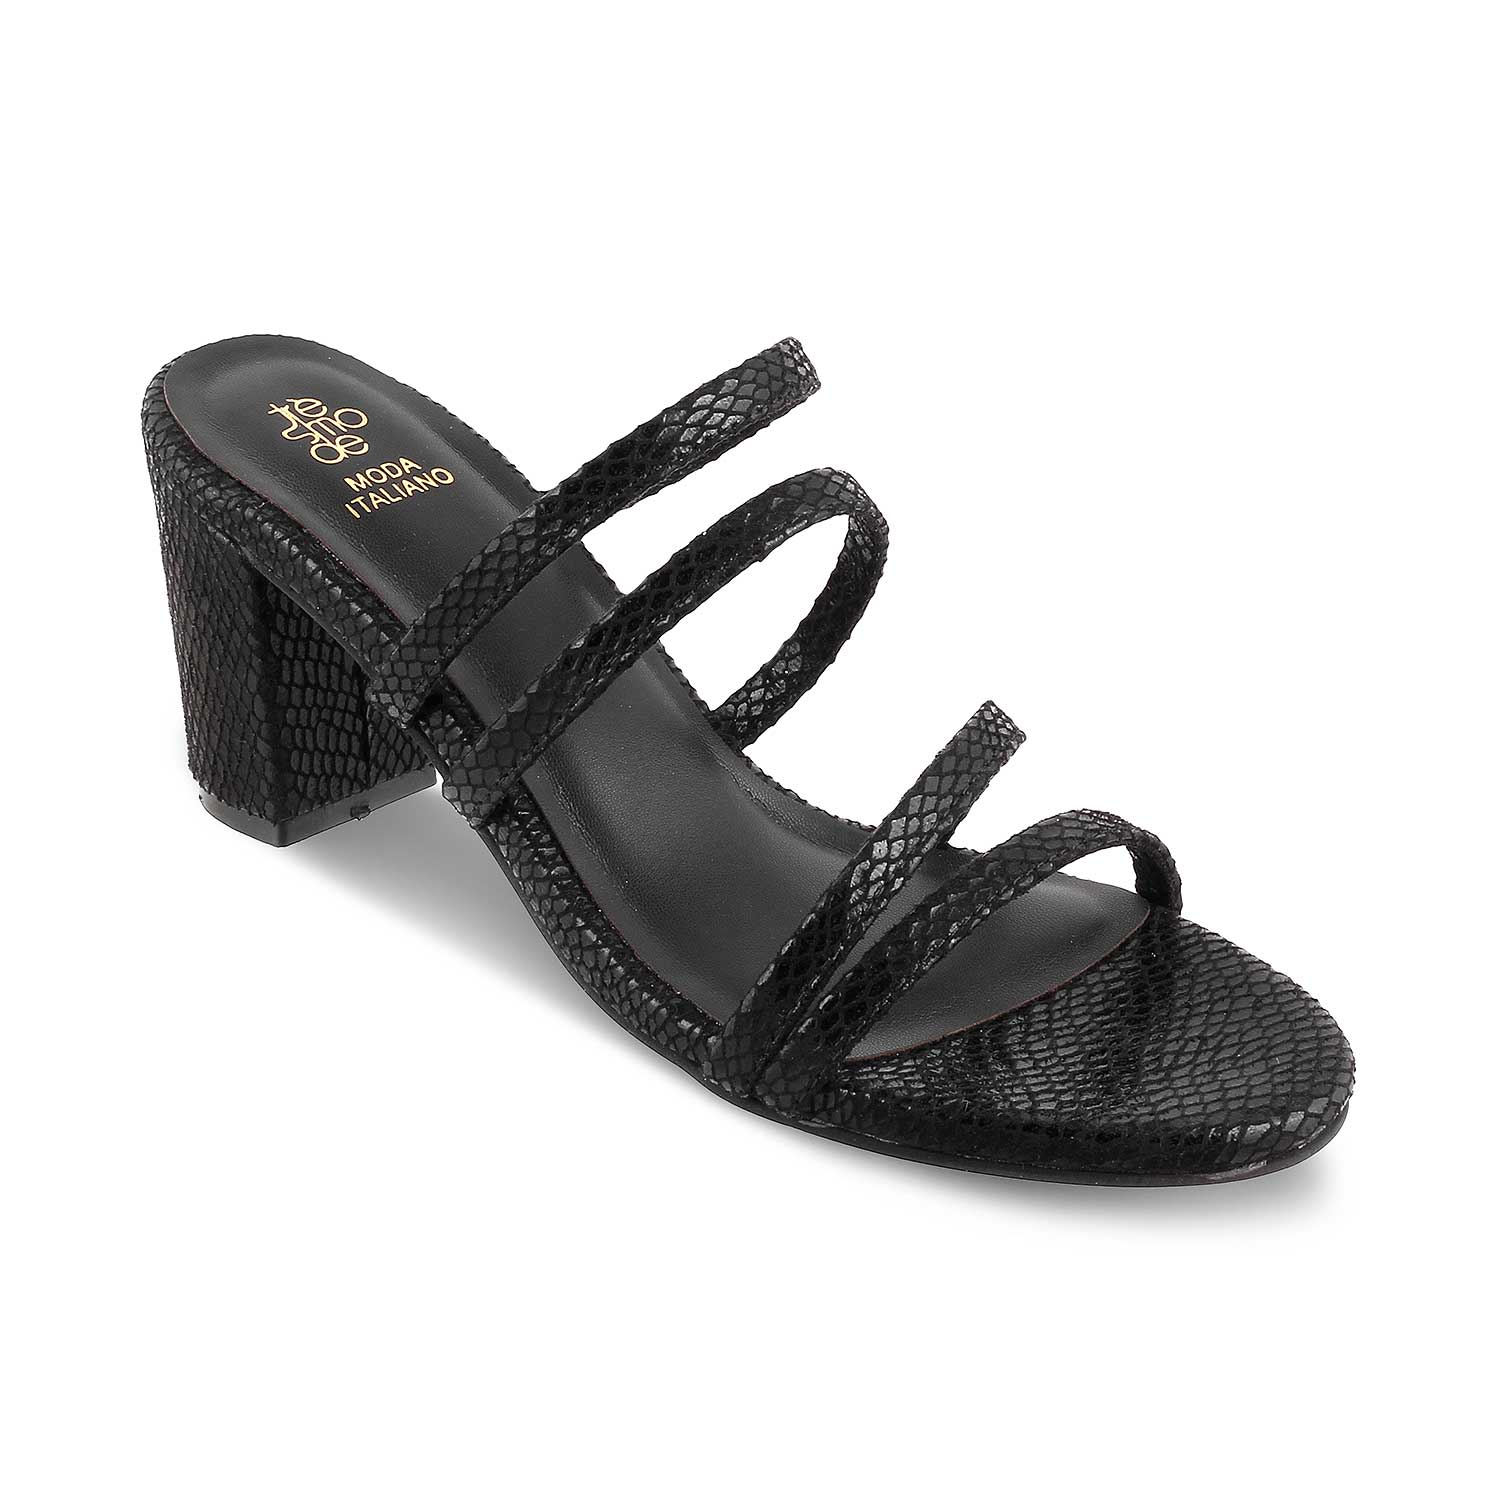 The Imulate Black Women's Dress Block Heel Sandals Tresmode - Tresmode